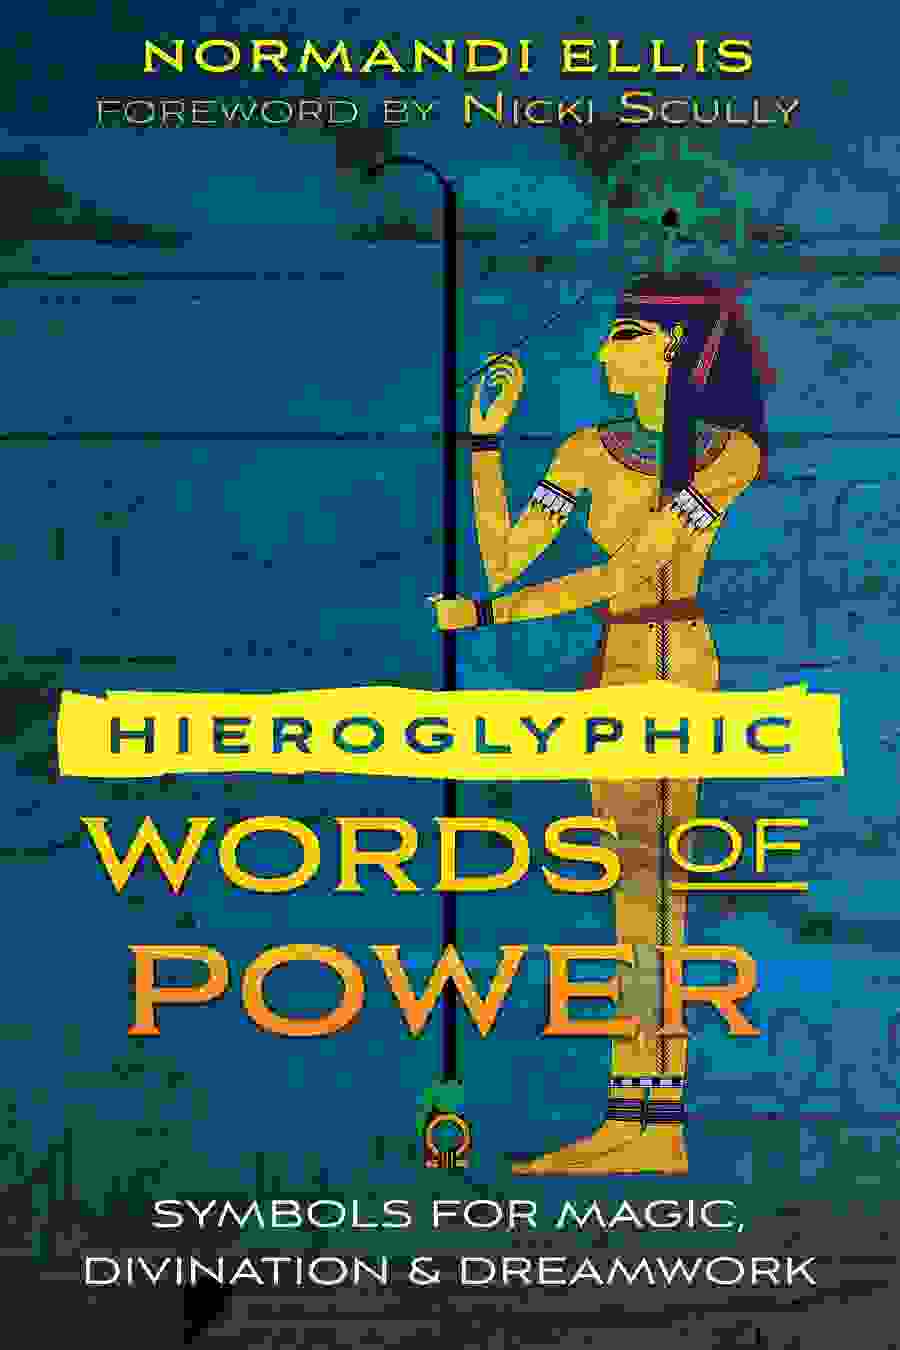 www.innertraditions.com/books/hieroglyphic-words-of-power  
